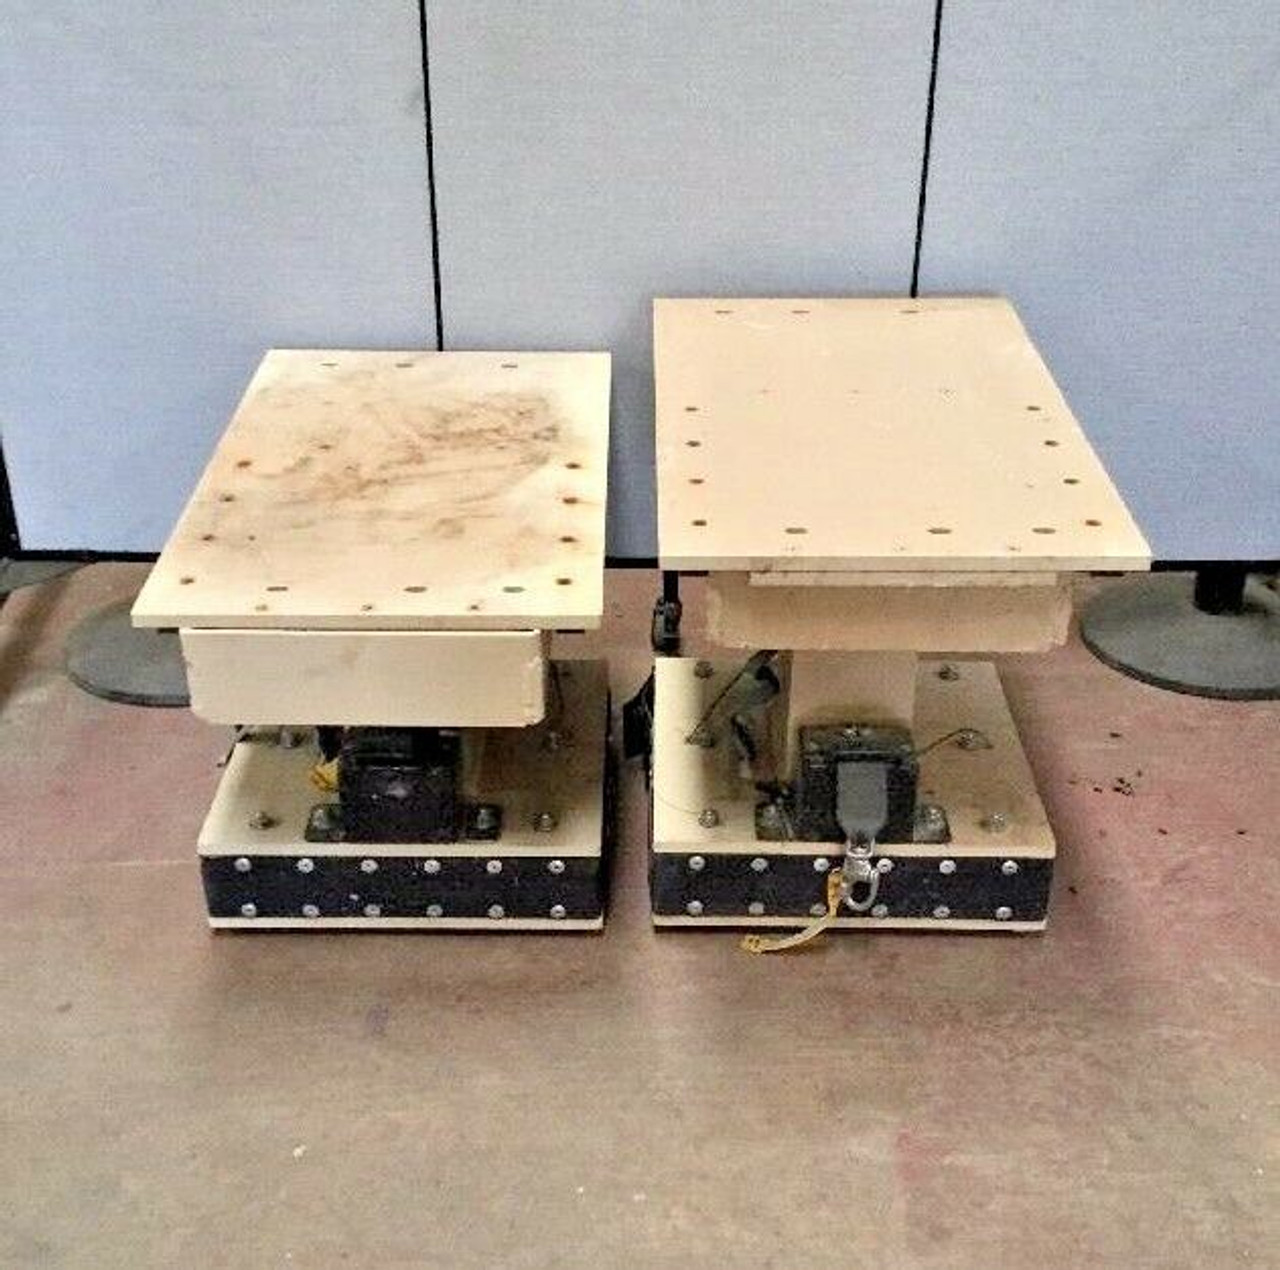 Gunner Platforms 1631 BMI Desert Tan